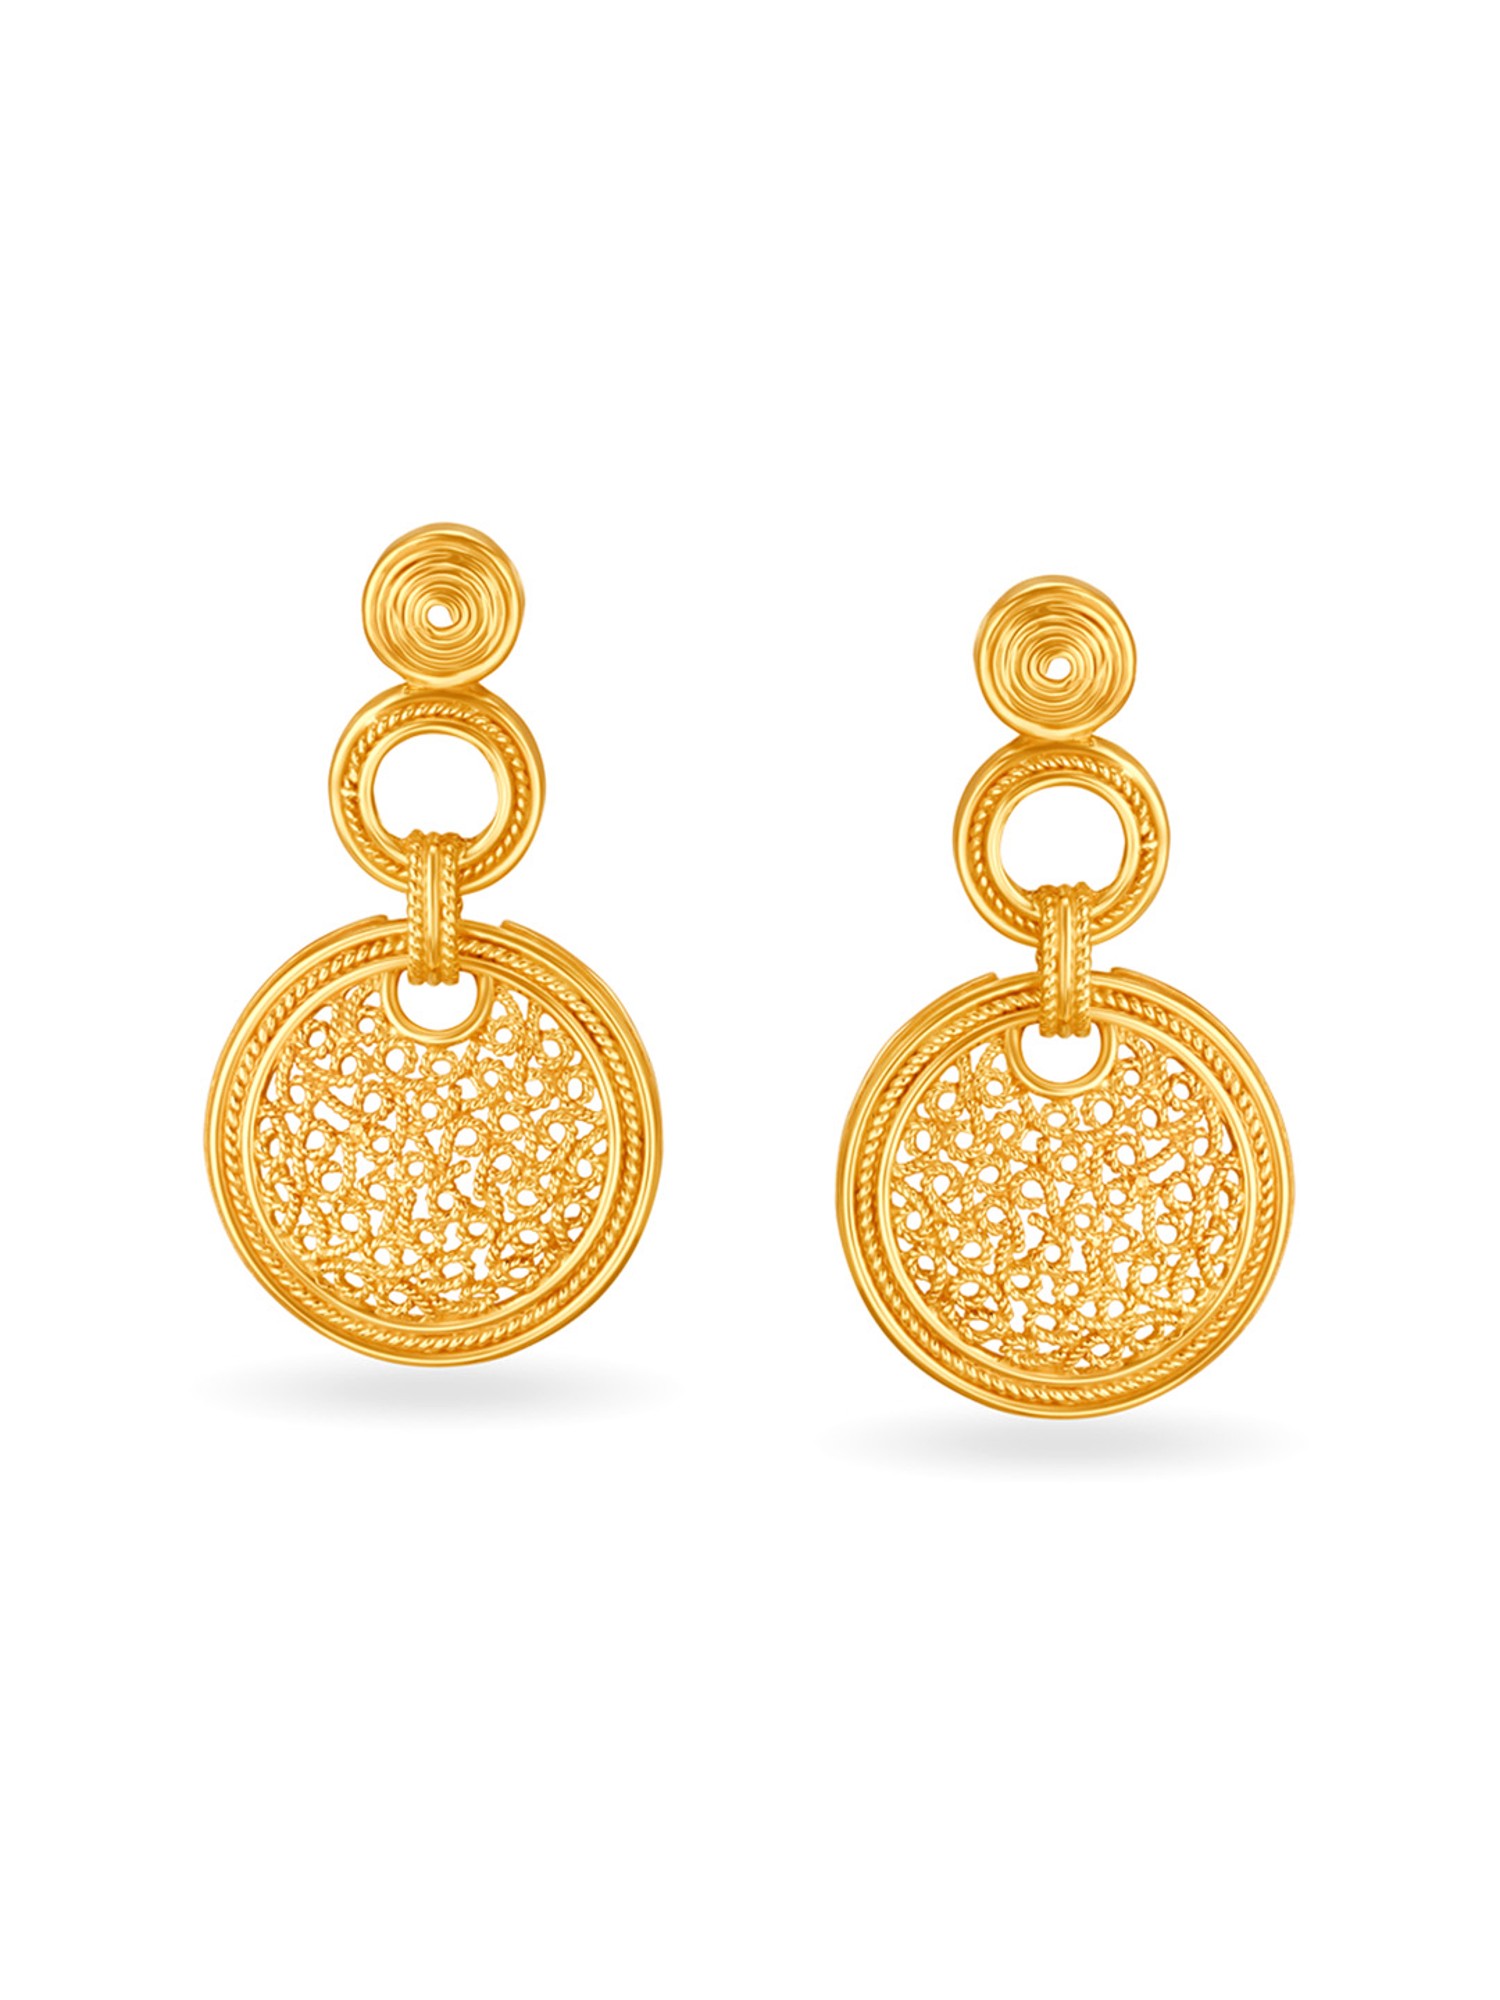 Tanishq Letest gold earrings design #tanishqjewellery #goldearring  #goldjewellery - YouTube